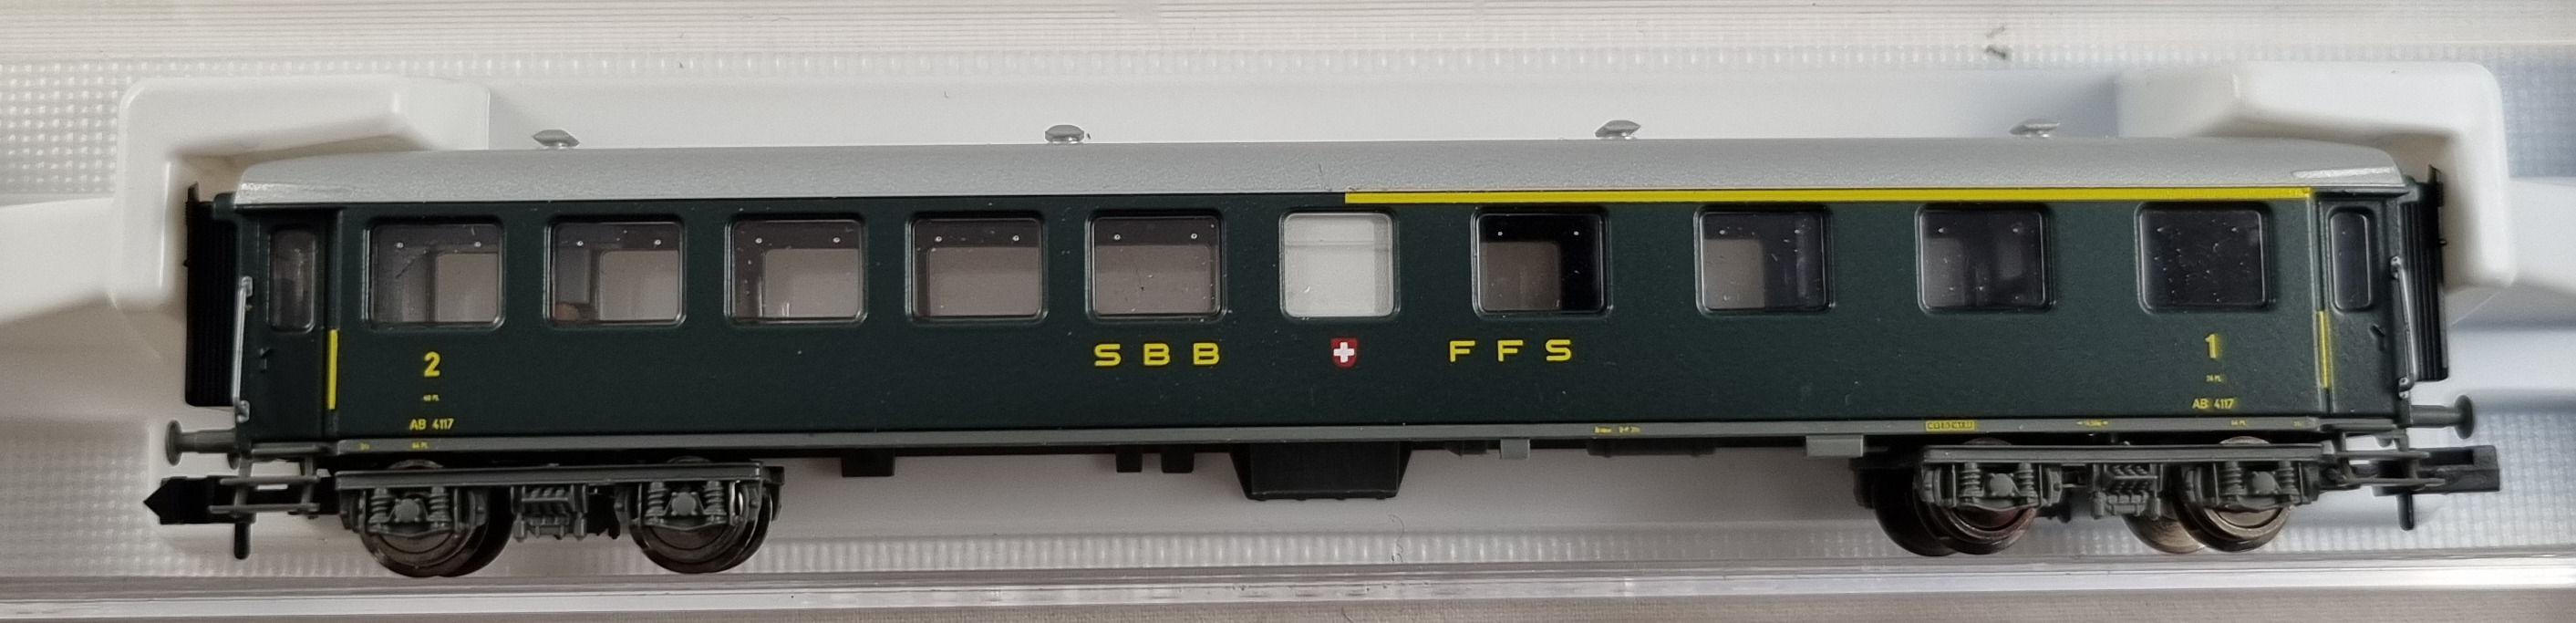 Fleischmann 813804, SBB personvagn, Skala N, SH 767-12